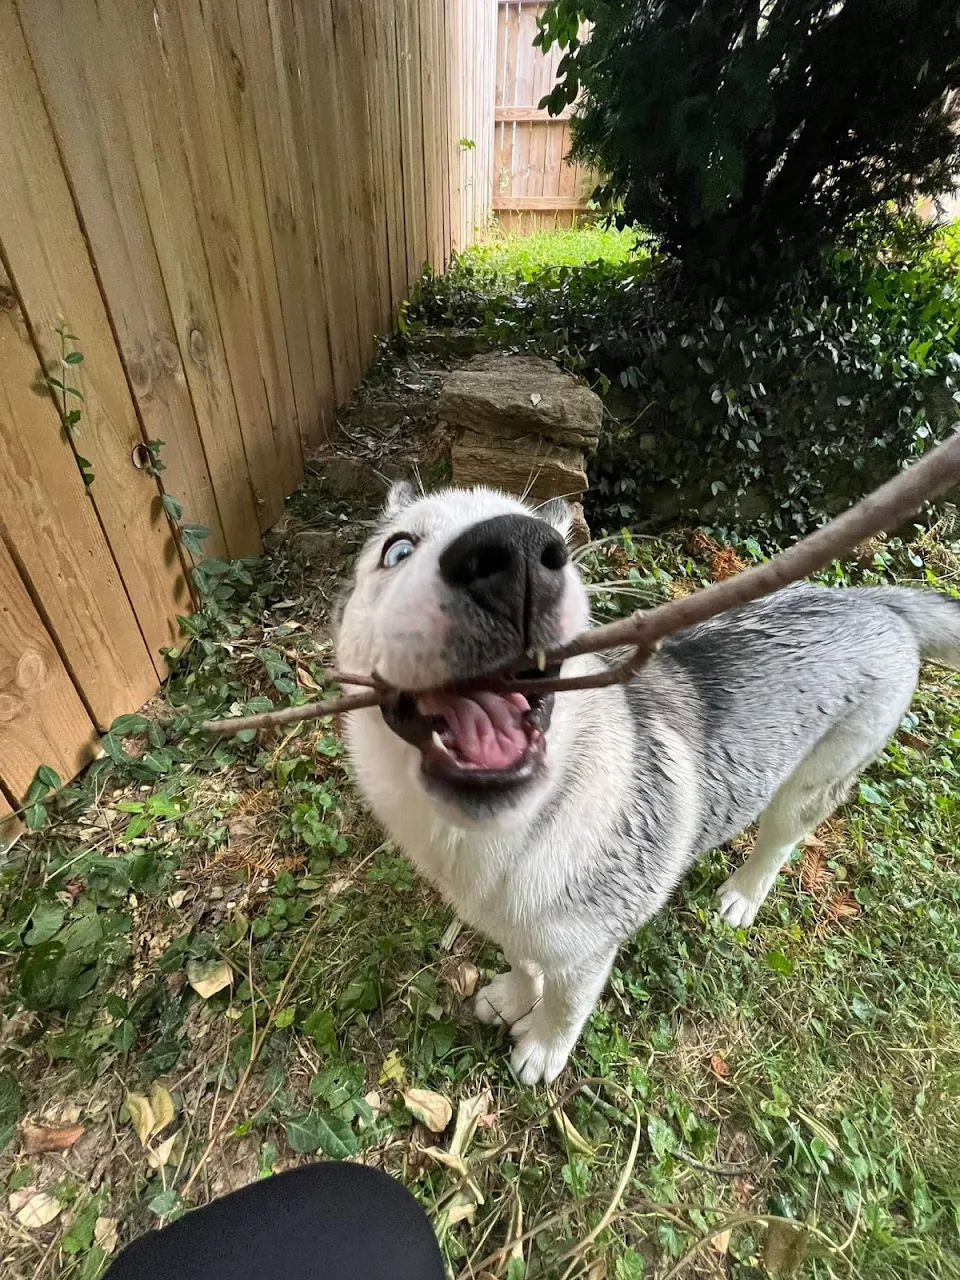 well she got the stick...